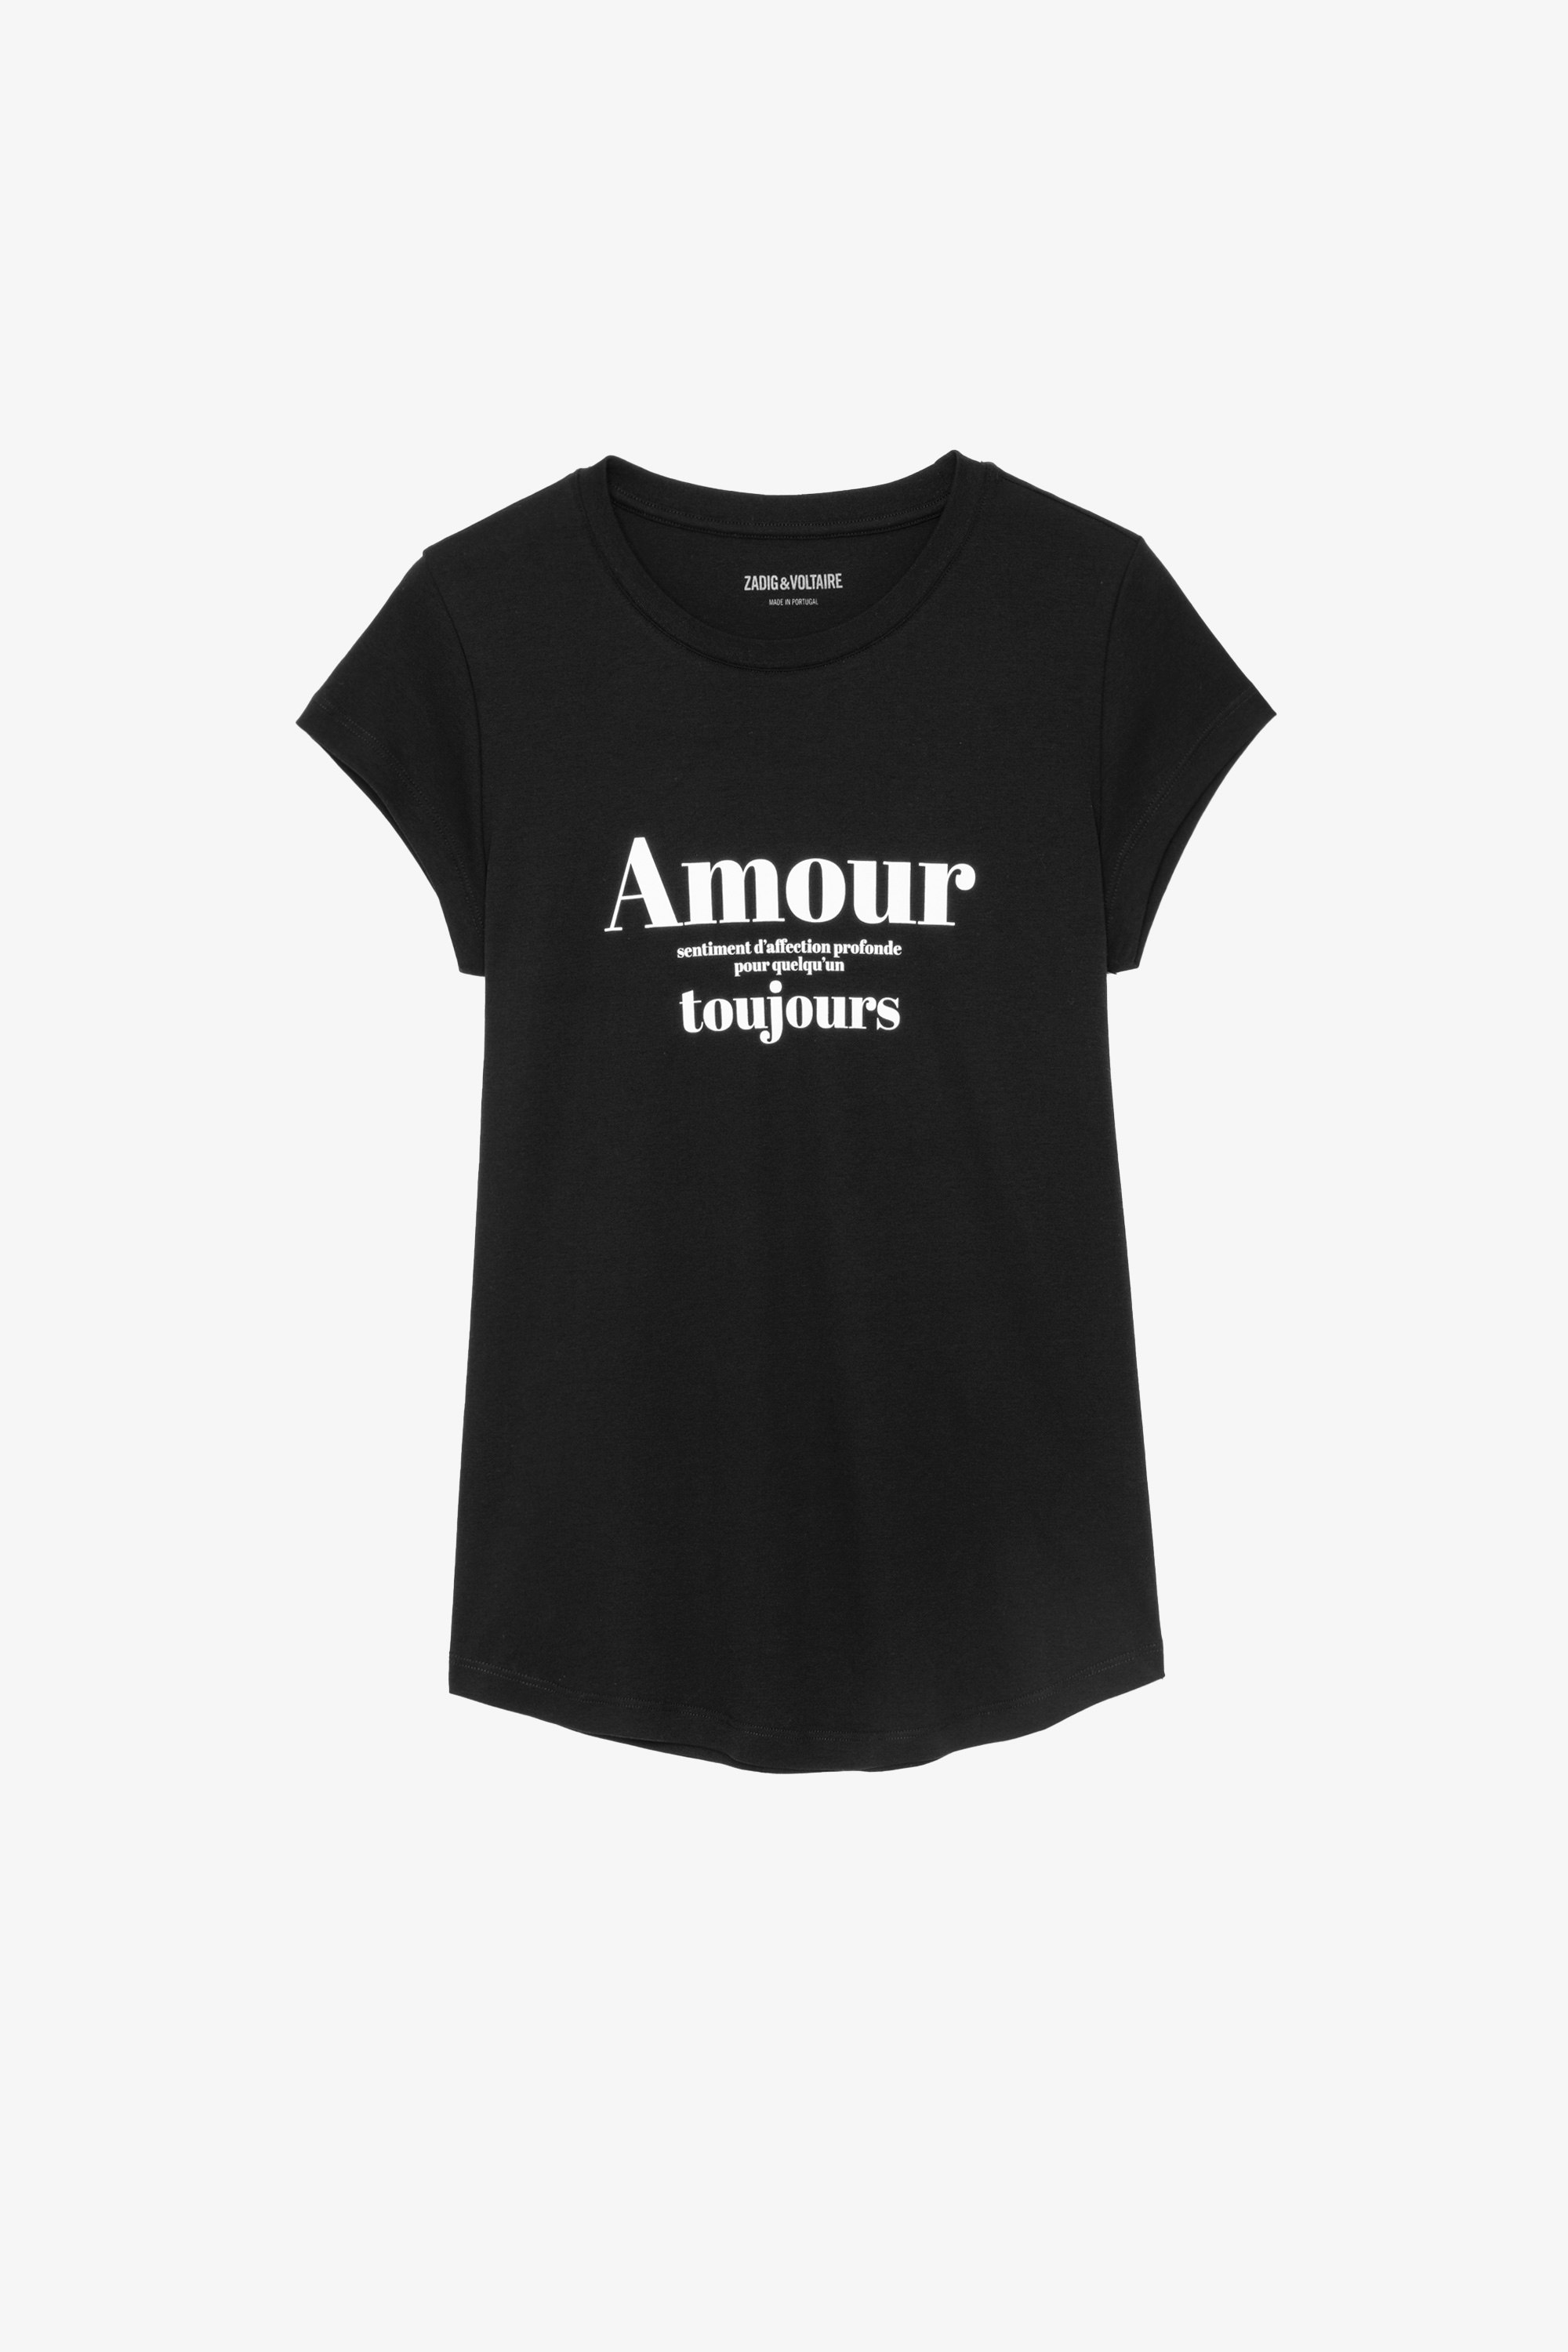 Camiseta Skinny Amour Toujours Camiseta de algodón negro con estampado "Amour Toujours» en contraste para mujer